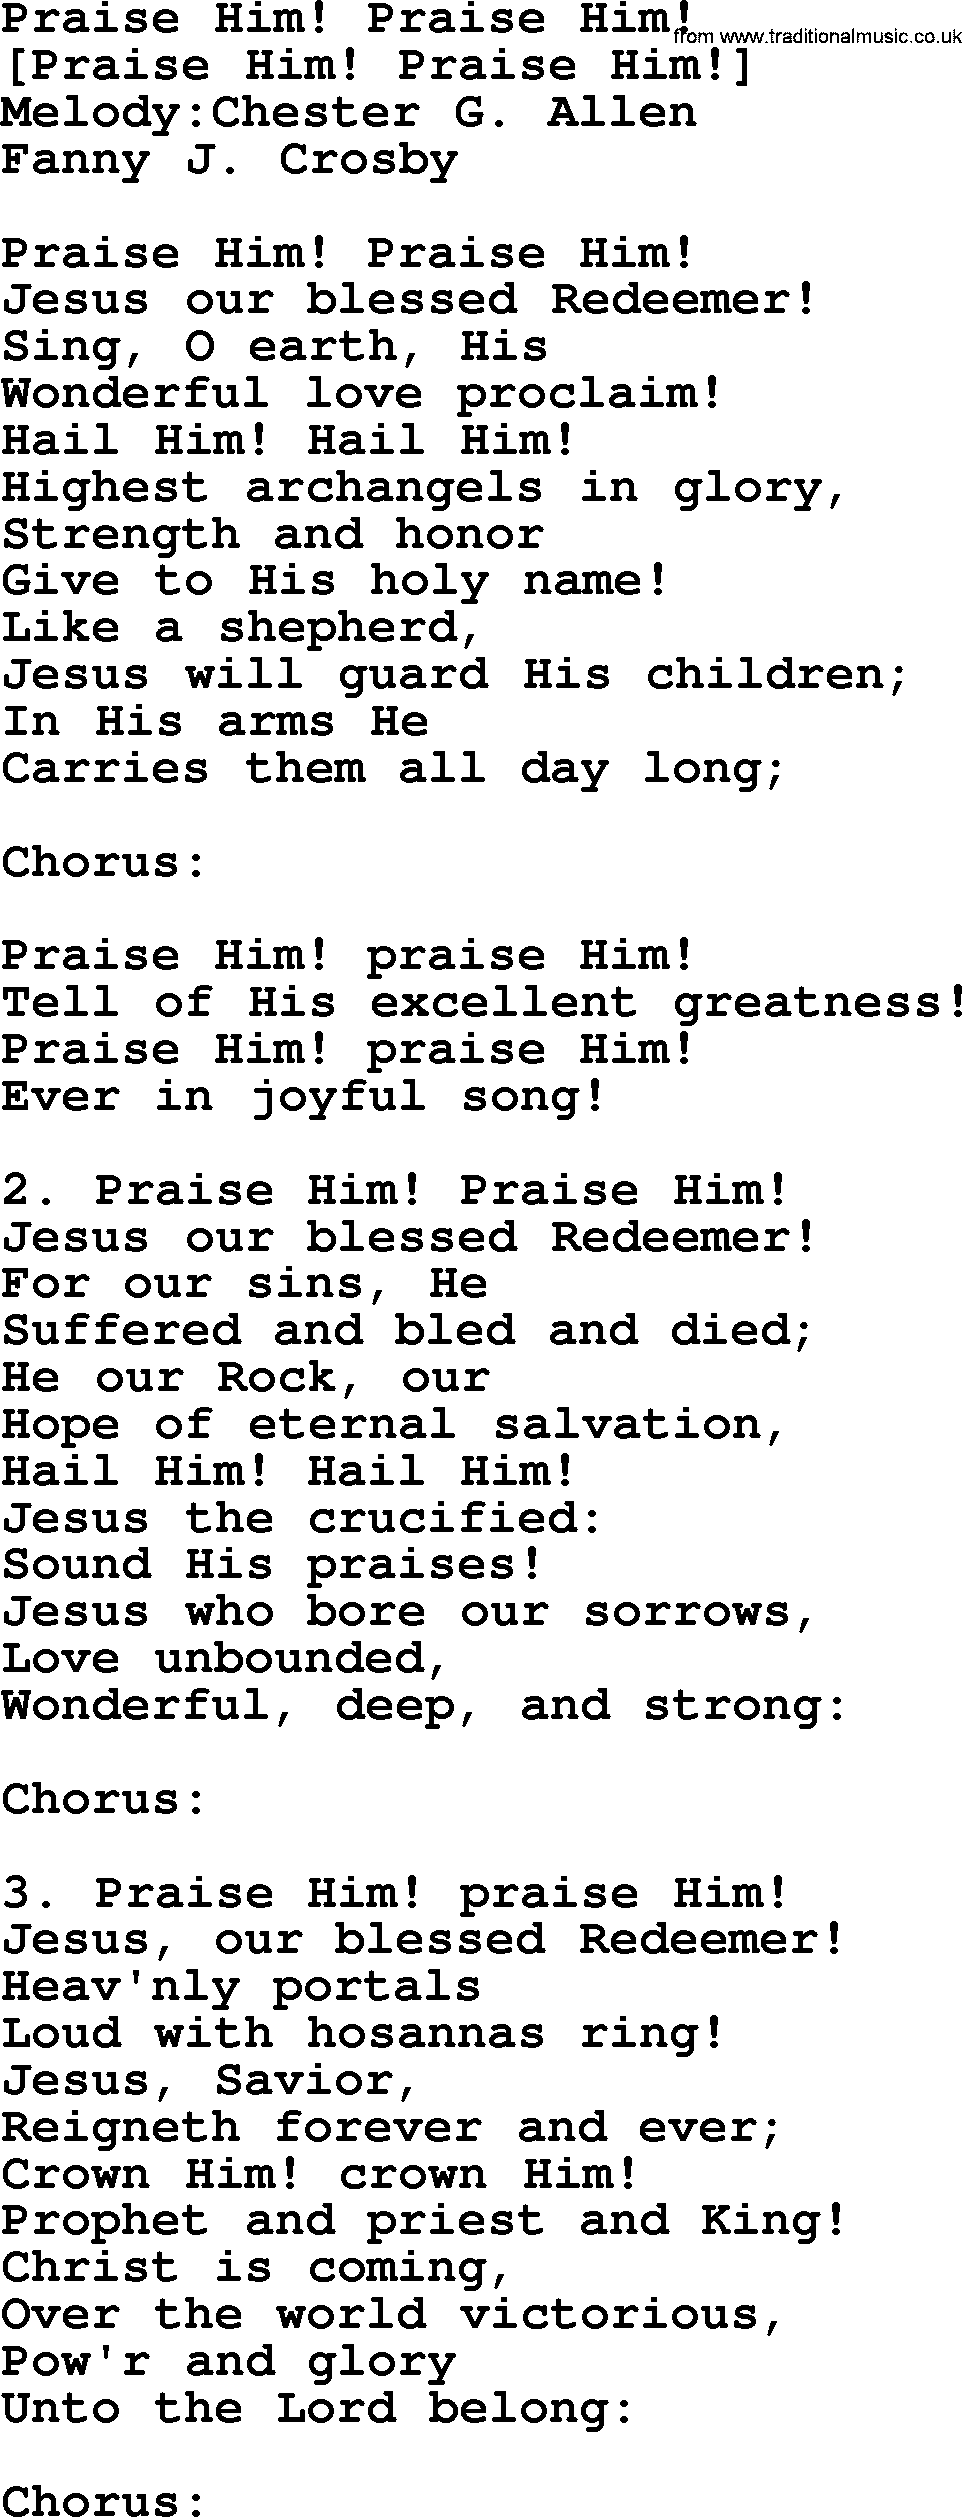 Old American Song: Praise Him! Praise Him!, lyrics